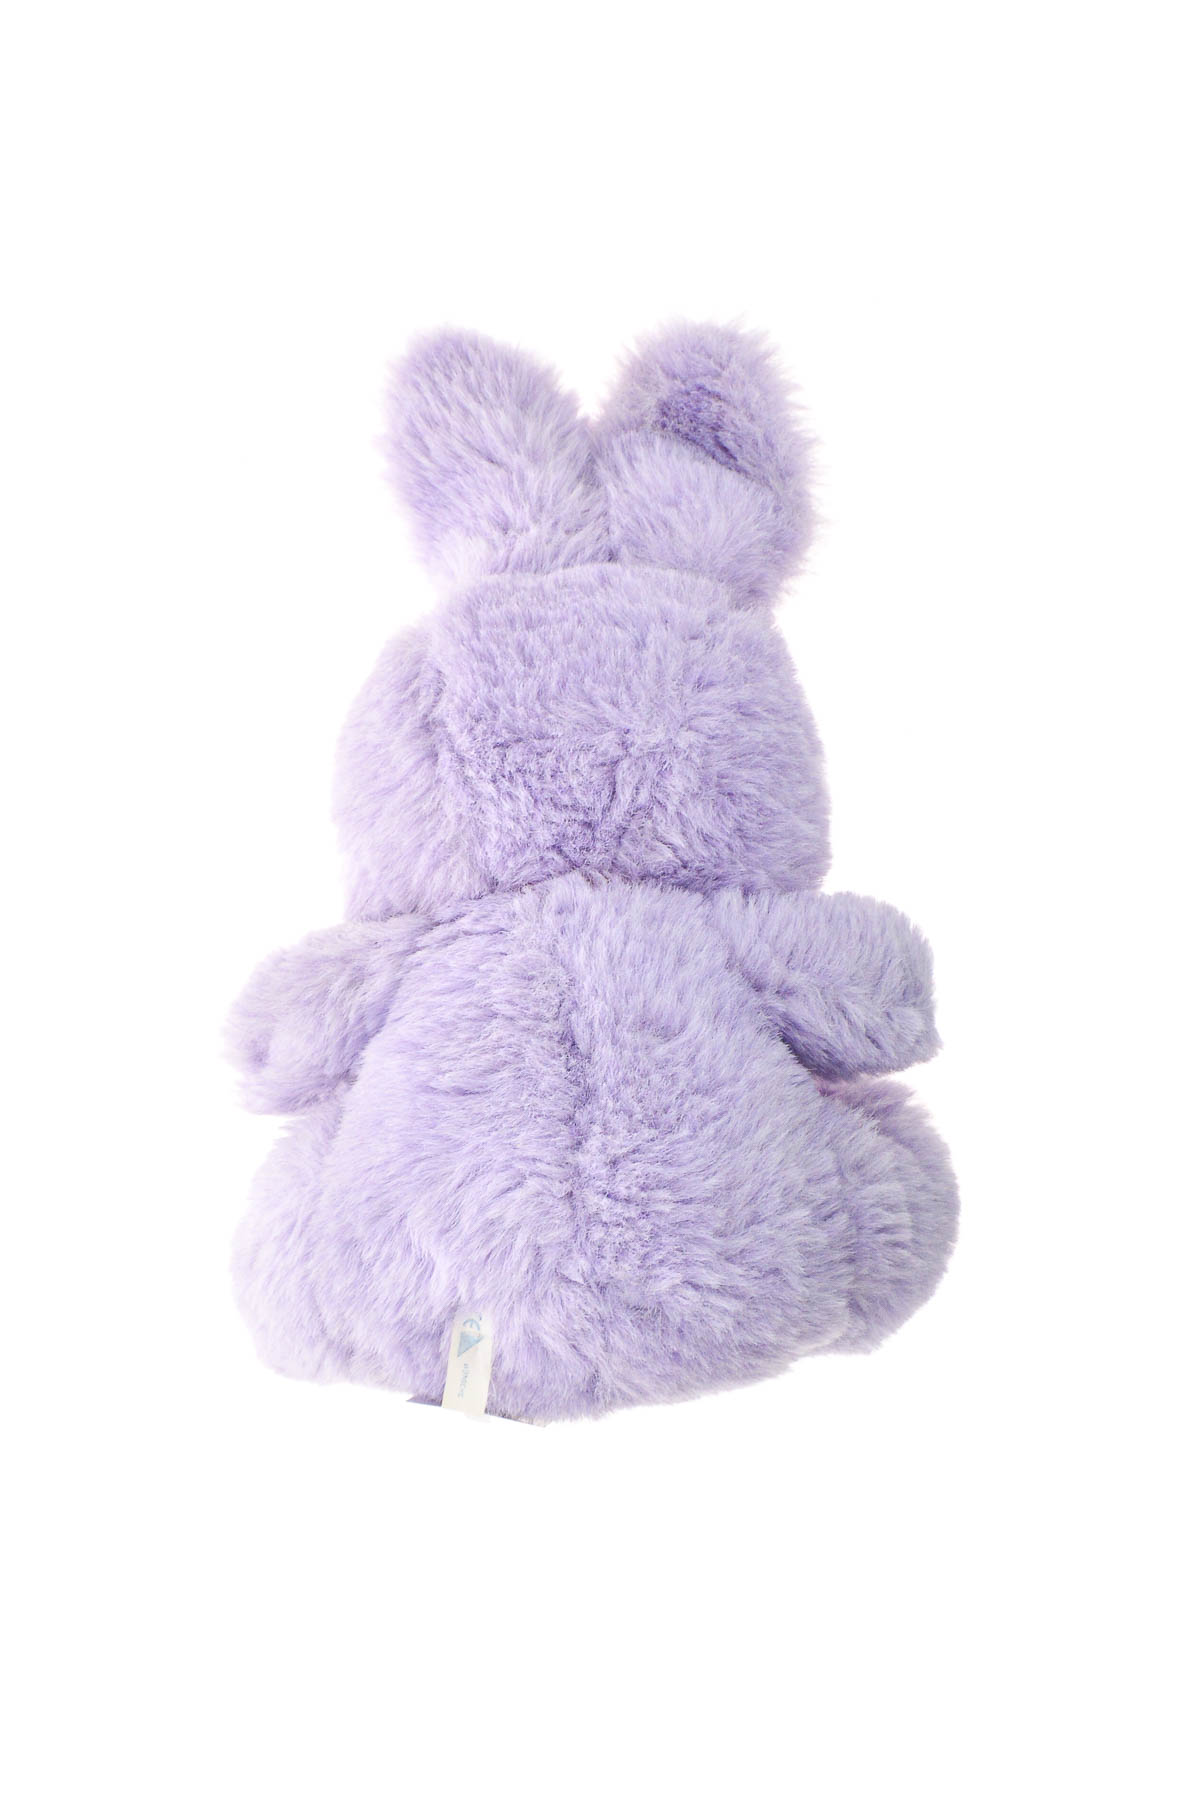 Stuffed toys - Rabbit - 2